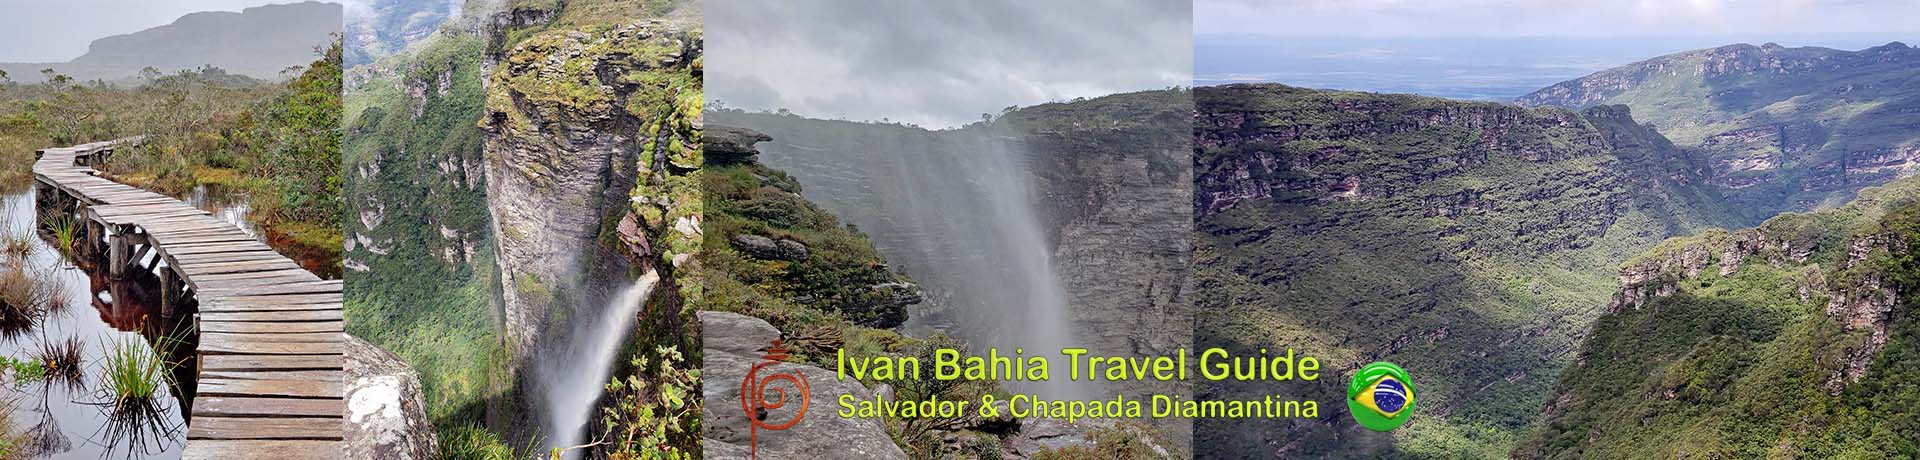 Ivan Bahia Guide oraganise les meilleures séjours, randonnées et ballades au Parc National Chapada Diamantina (connu comme le 'Grand Canyon Brésilien') Ce guide francophone vous montre les plus belles vues du Grand Canyon du Brésil @ivanbahiaguide @ivanbahiareisgids #ibg #ivanbahiaguide #ivanbahiatravelguide #zentur #chapadadiamantinazen #ivanchapadadiamantinaguide #valedopati #patyvalley #pati #viapati #valecapao #ivanchapadaguide #chapadadiamantinatransfer #chapadatrekking #chapadaroots #chapadasoul #lencoisbahia #chapadadiamantinatrekking #ivanchapadadiamantinaguide #chapadadiamantinaguide #guidechapadadiamantina #lencois #lençois #chapadaadventuredaniel #diamantinamountains #zentur #guiachapadadiamantina #chapadaaventure #discoverchapada #chapadasoul #diamantinatrip  #tripadvisor #bahiametisse #fernandobingre #ivansalvadorbahia #salvadorbahiaTravel #toursbylocals #fotosbahia #bahiafotos #toursbylocalsguide #toursbylocals #chapadadiamantinanationalpark #yourtoursbrazil #maurotours #bahiatopturismo #bahiapremium #maisbahiaturismo #fernandobingretourguide #braziliangrandcanyon #gaytravelinfo #gayhoneymoon #gayholiday #lgbttravel #lgbttravelers #lgbtqfriendly #gayworldwide #gaytravelguide #gaytravelinsta #gaystraveltoo #thegaypassport #wearetravelgays #gaycation #guiachapadadiamantina #cassiturismo